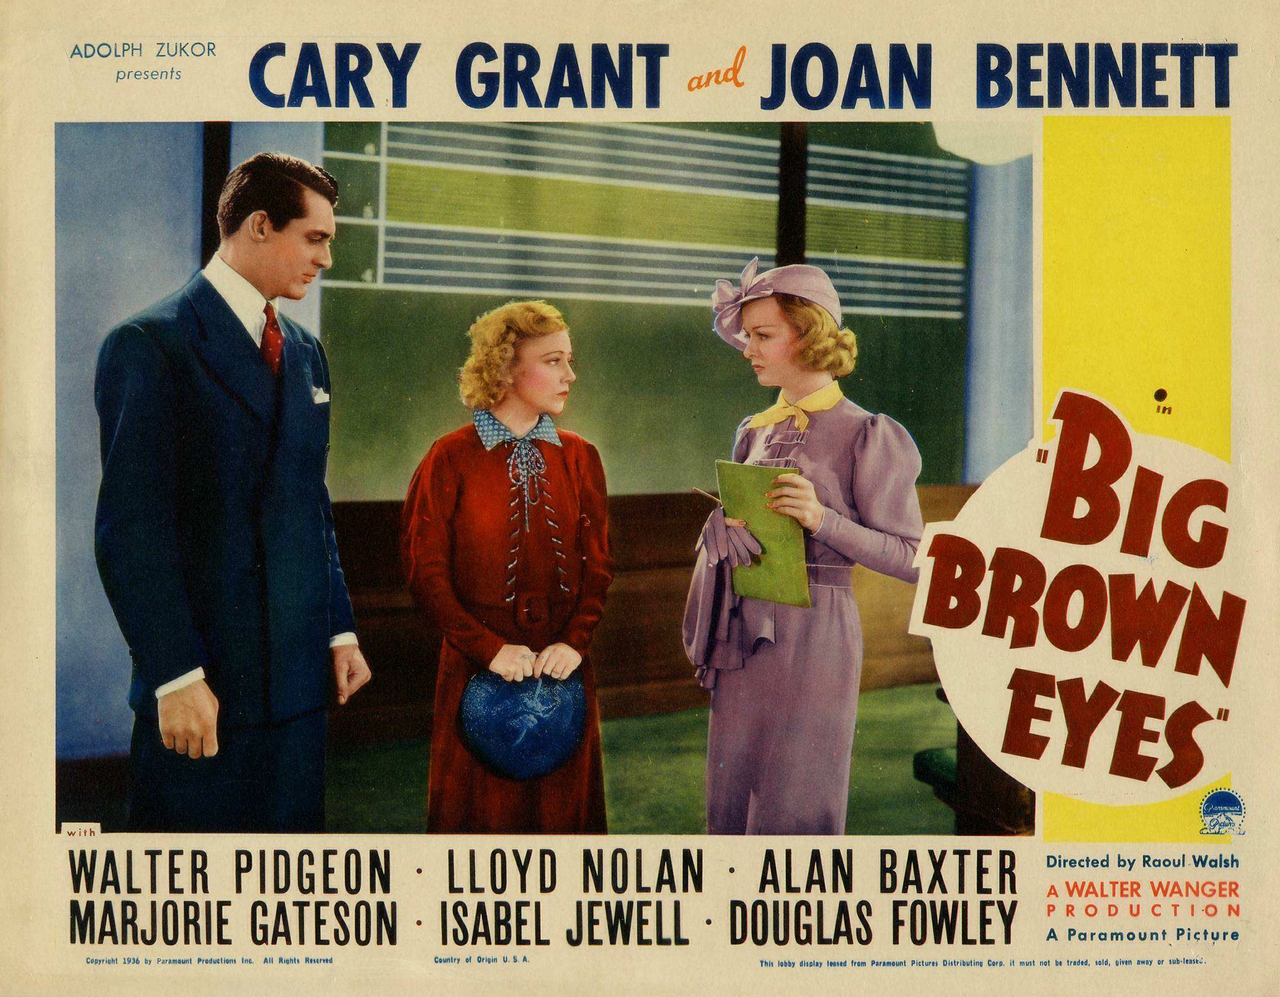 Joan Bennett در صحنه فیلم سینمایی Big Brown Eyes به همراه Isabel Jewell و کری گرانت